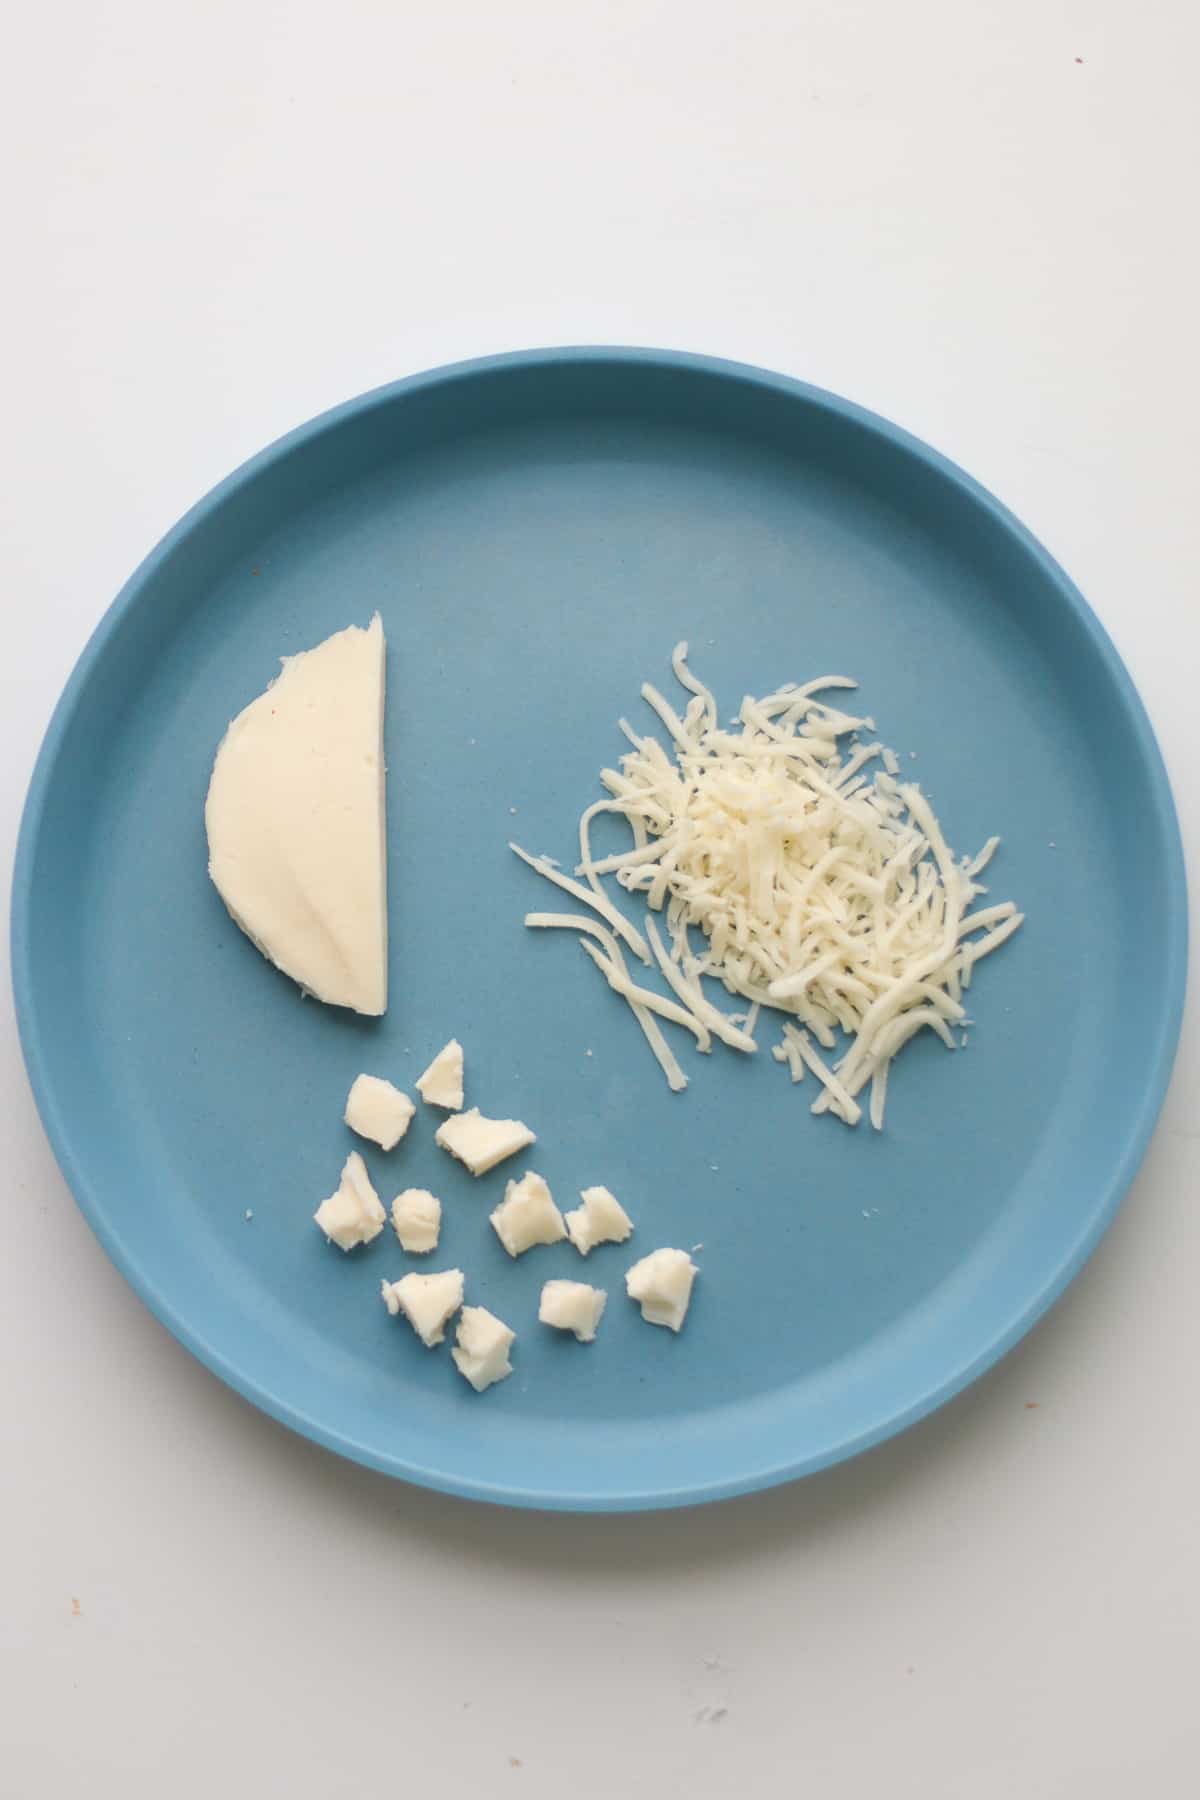 Shredded, bite-sized, and big strip of mozzarella cheese.